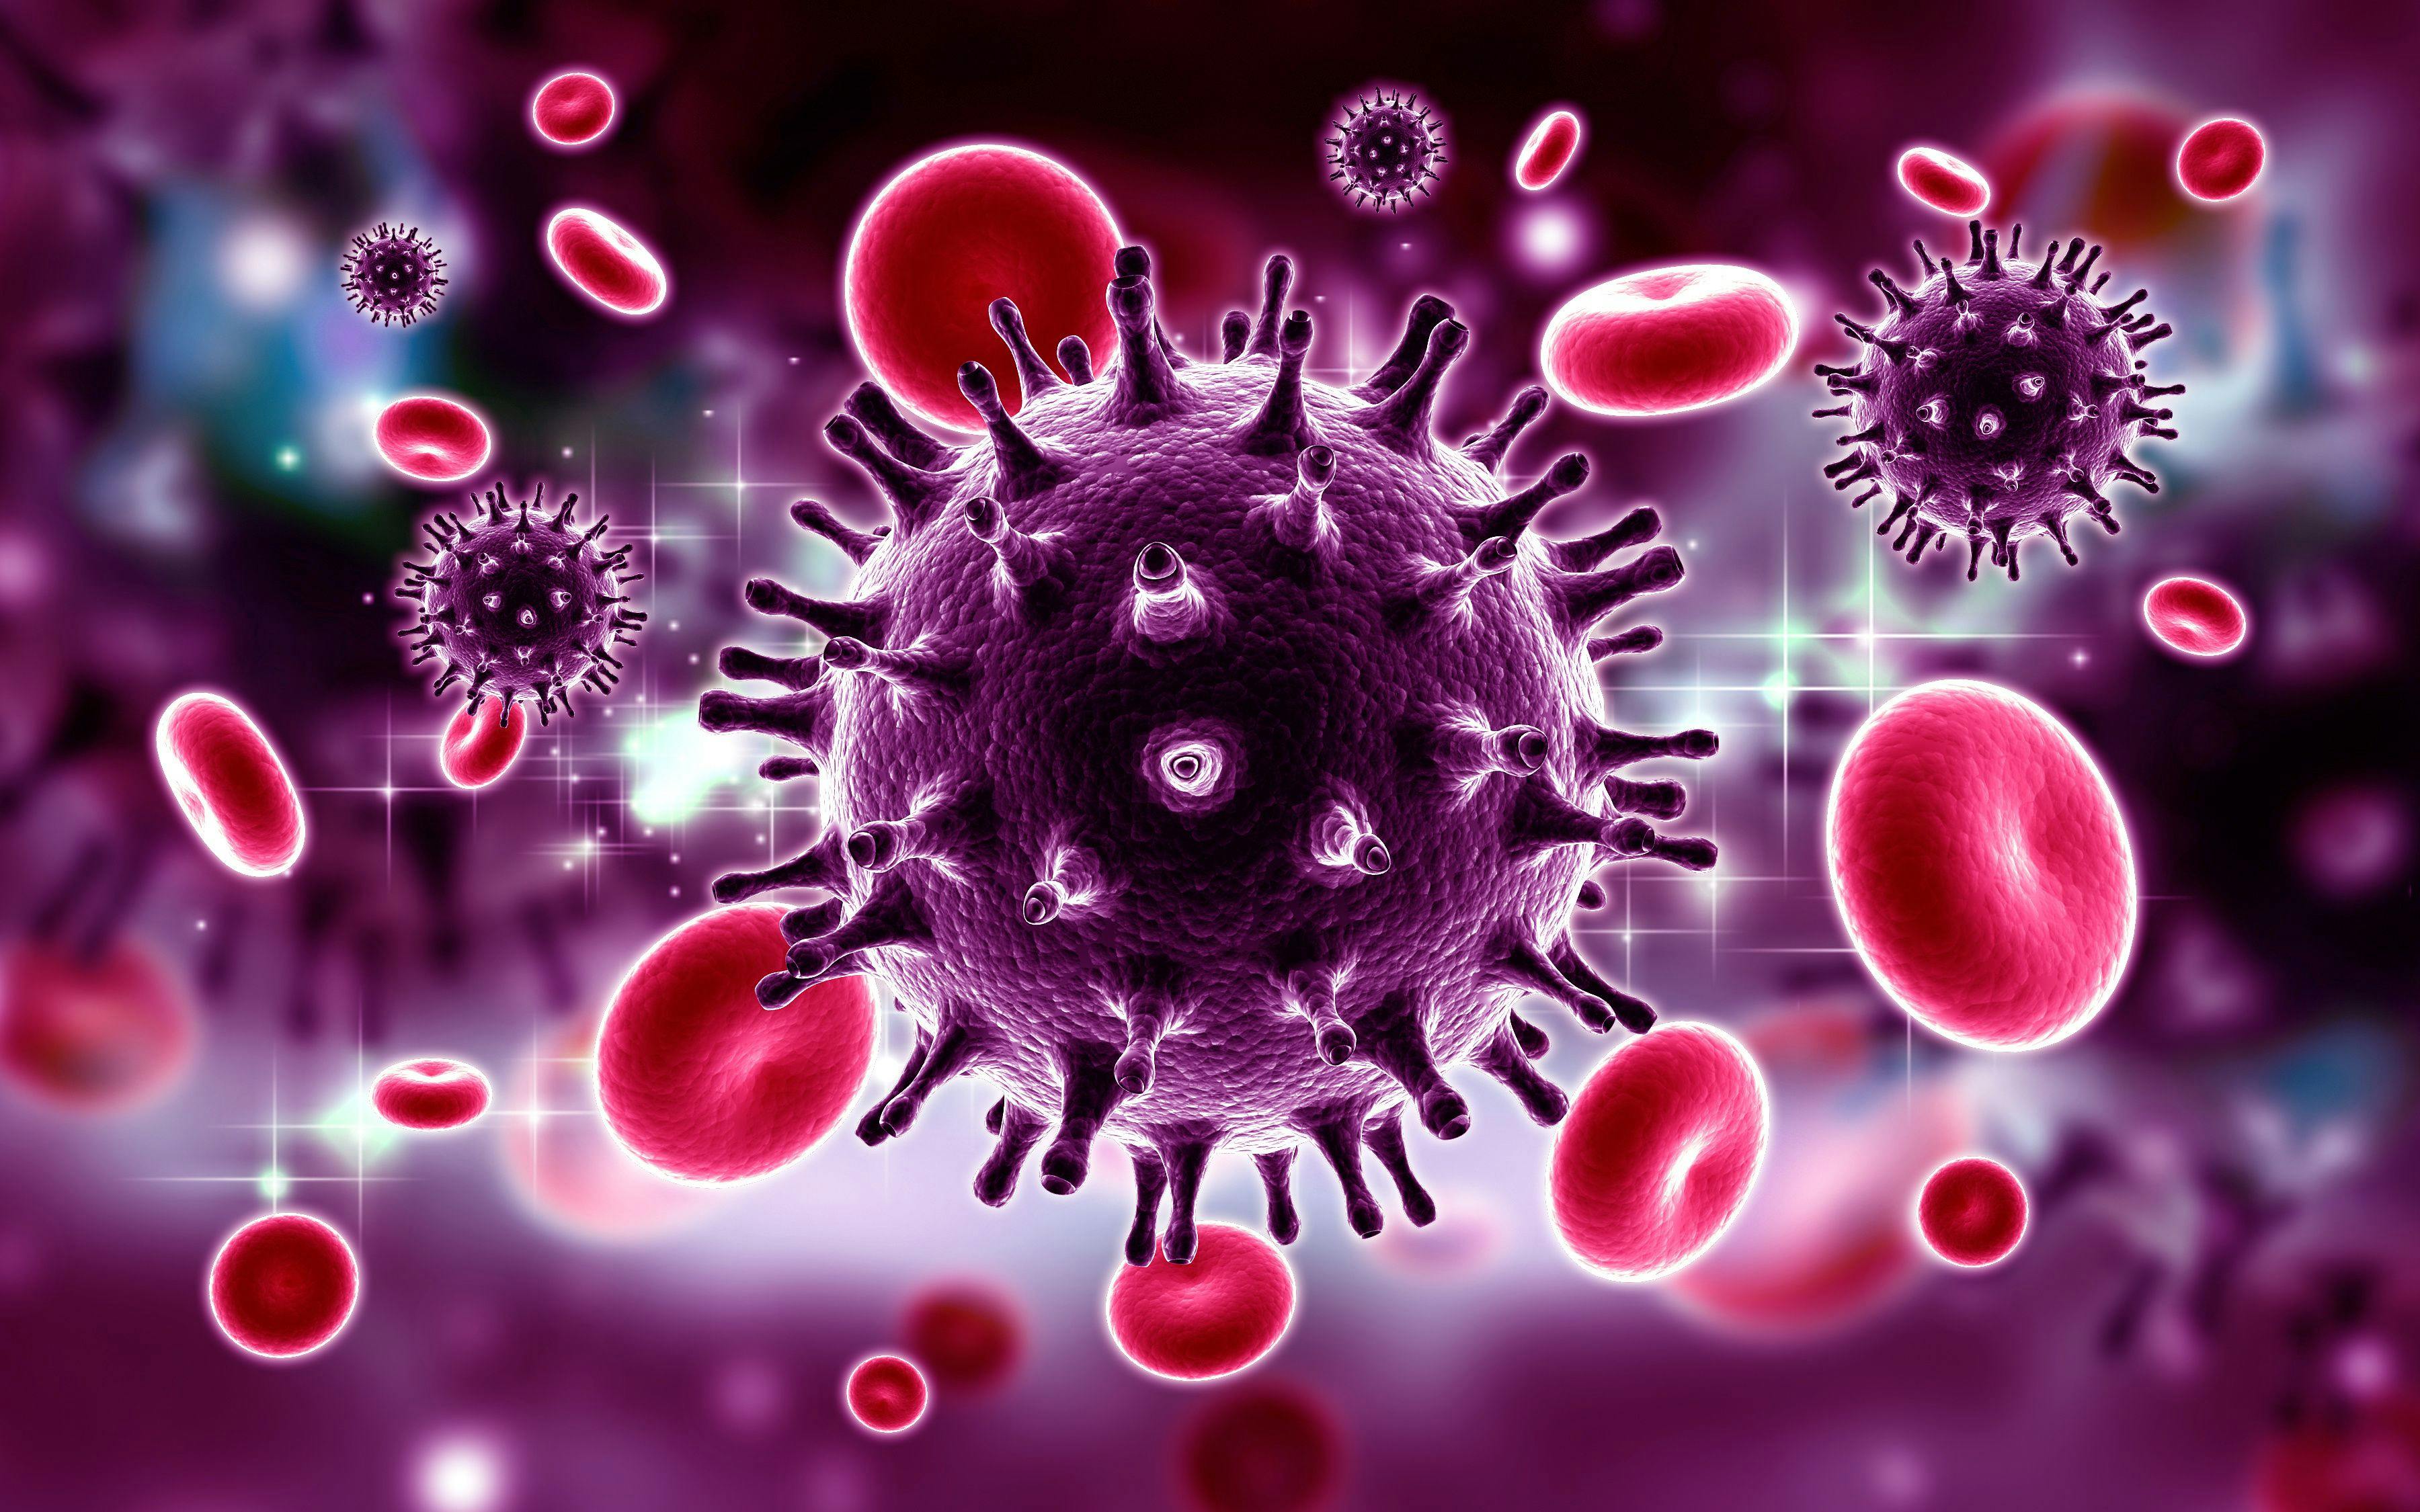 3D image of HIV virus in bloodstream